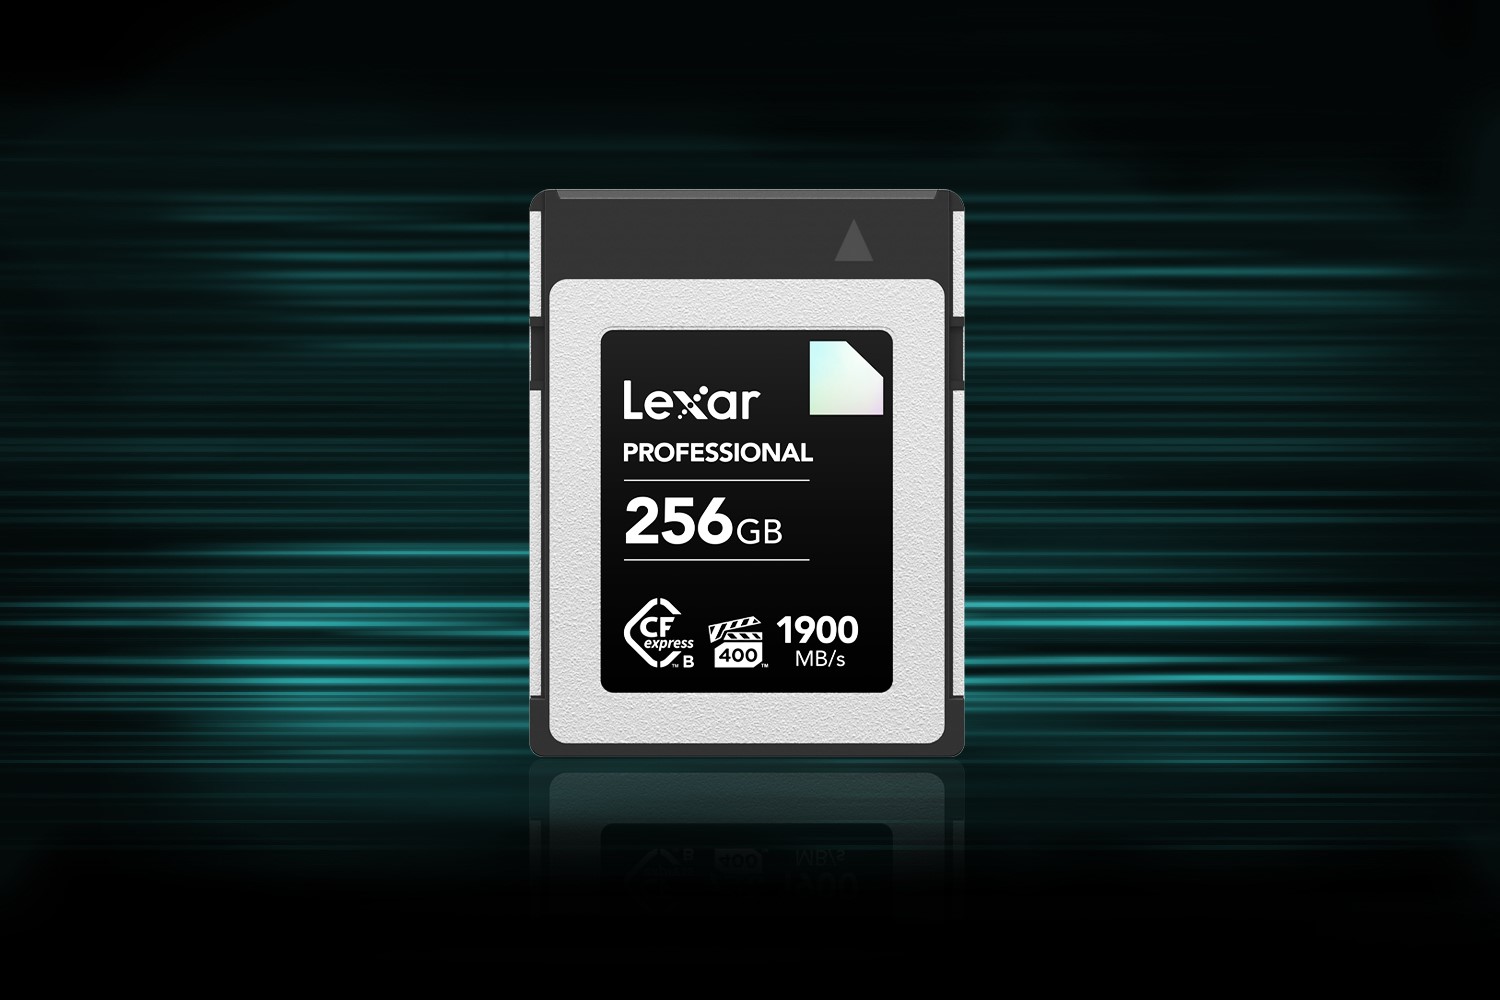 Lexar Professional 256GB Type B Diamond memory card